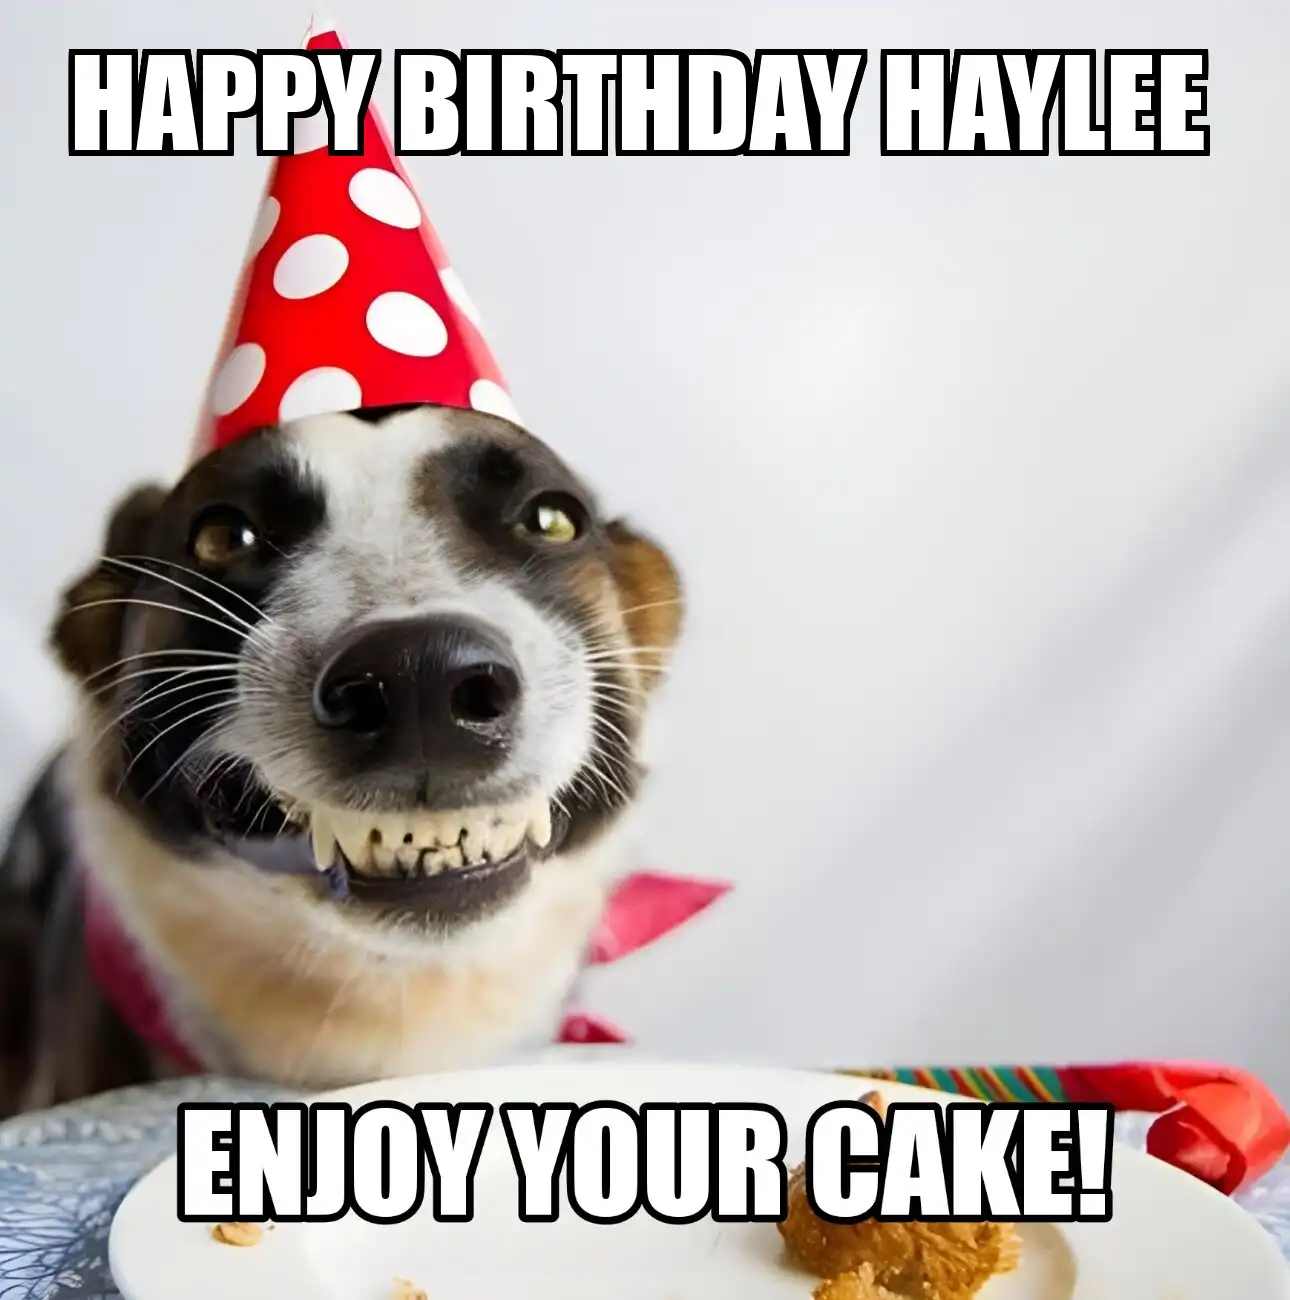 Happy Birthday Haylee Enjoy Your Cake Dog Meme